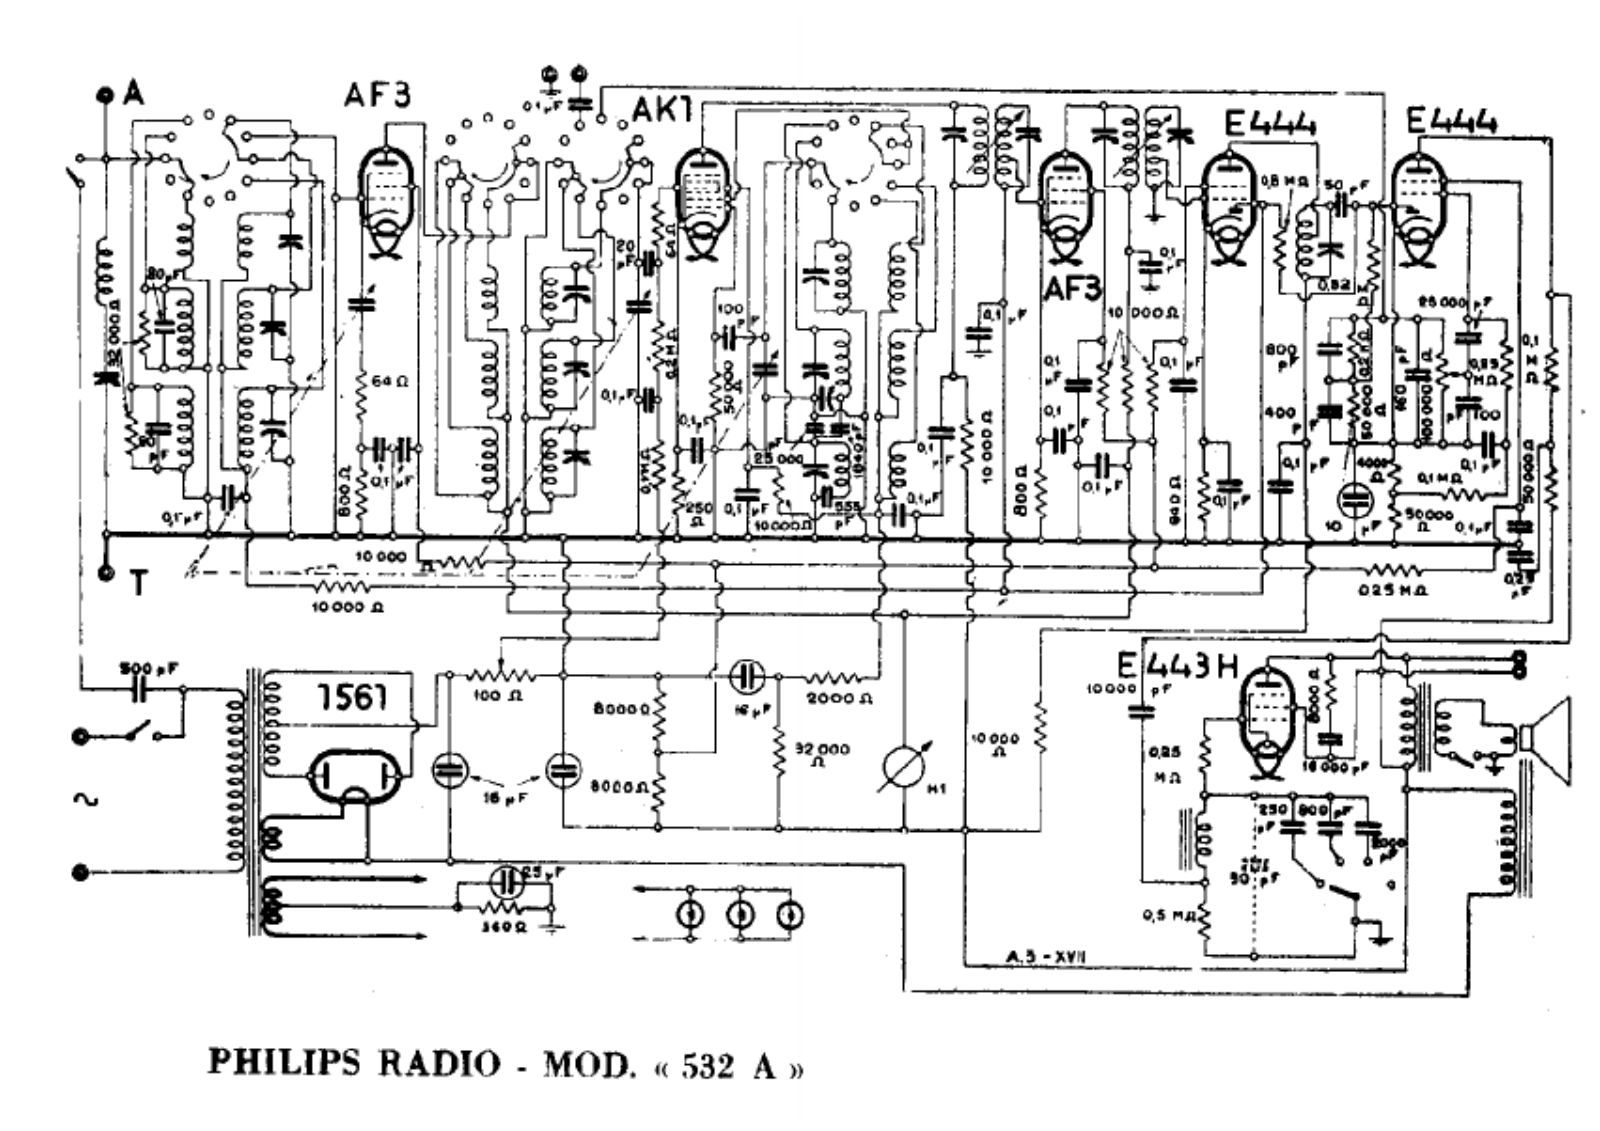 Philips 532a schematic